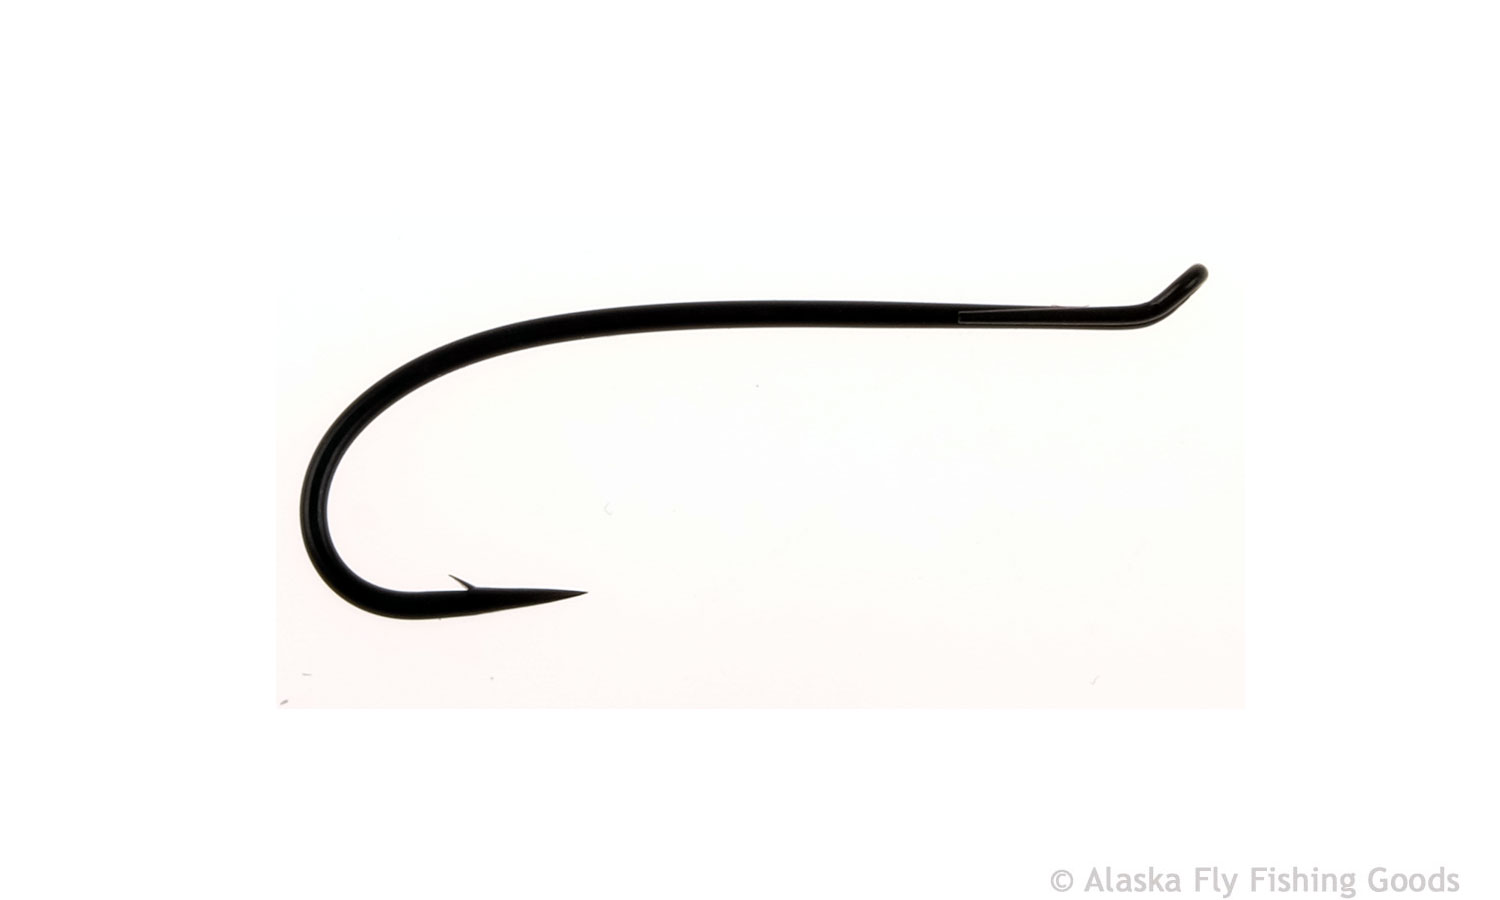 Hooks - Fly Tying - Alaska Fly Fishing Goods